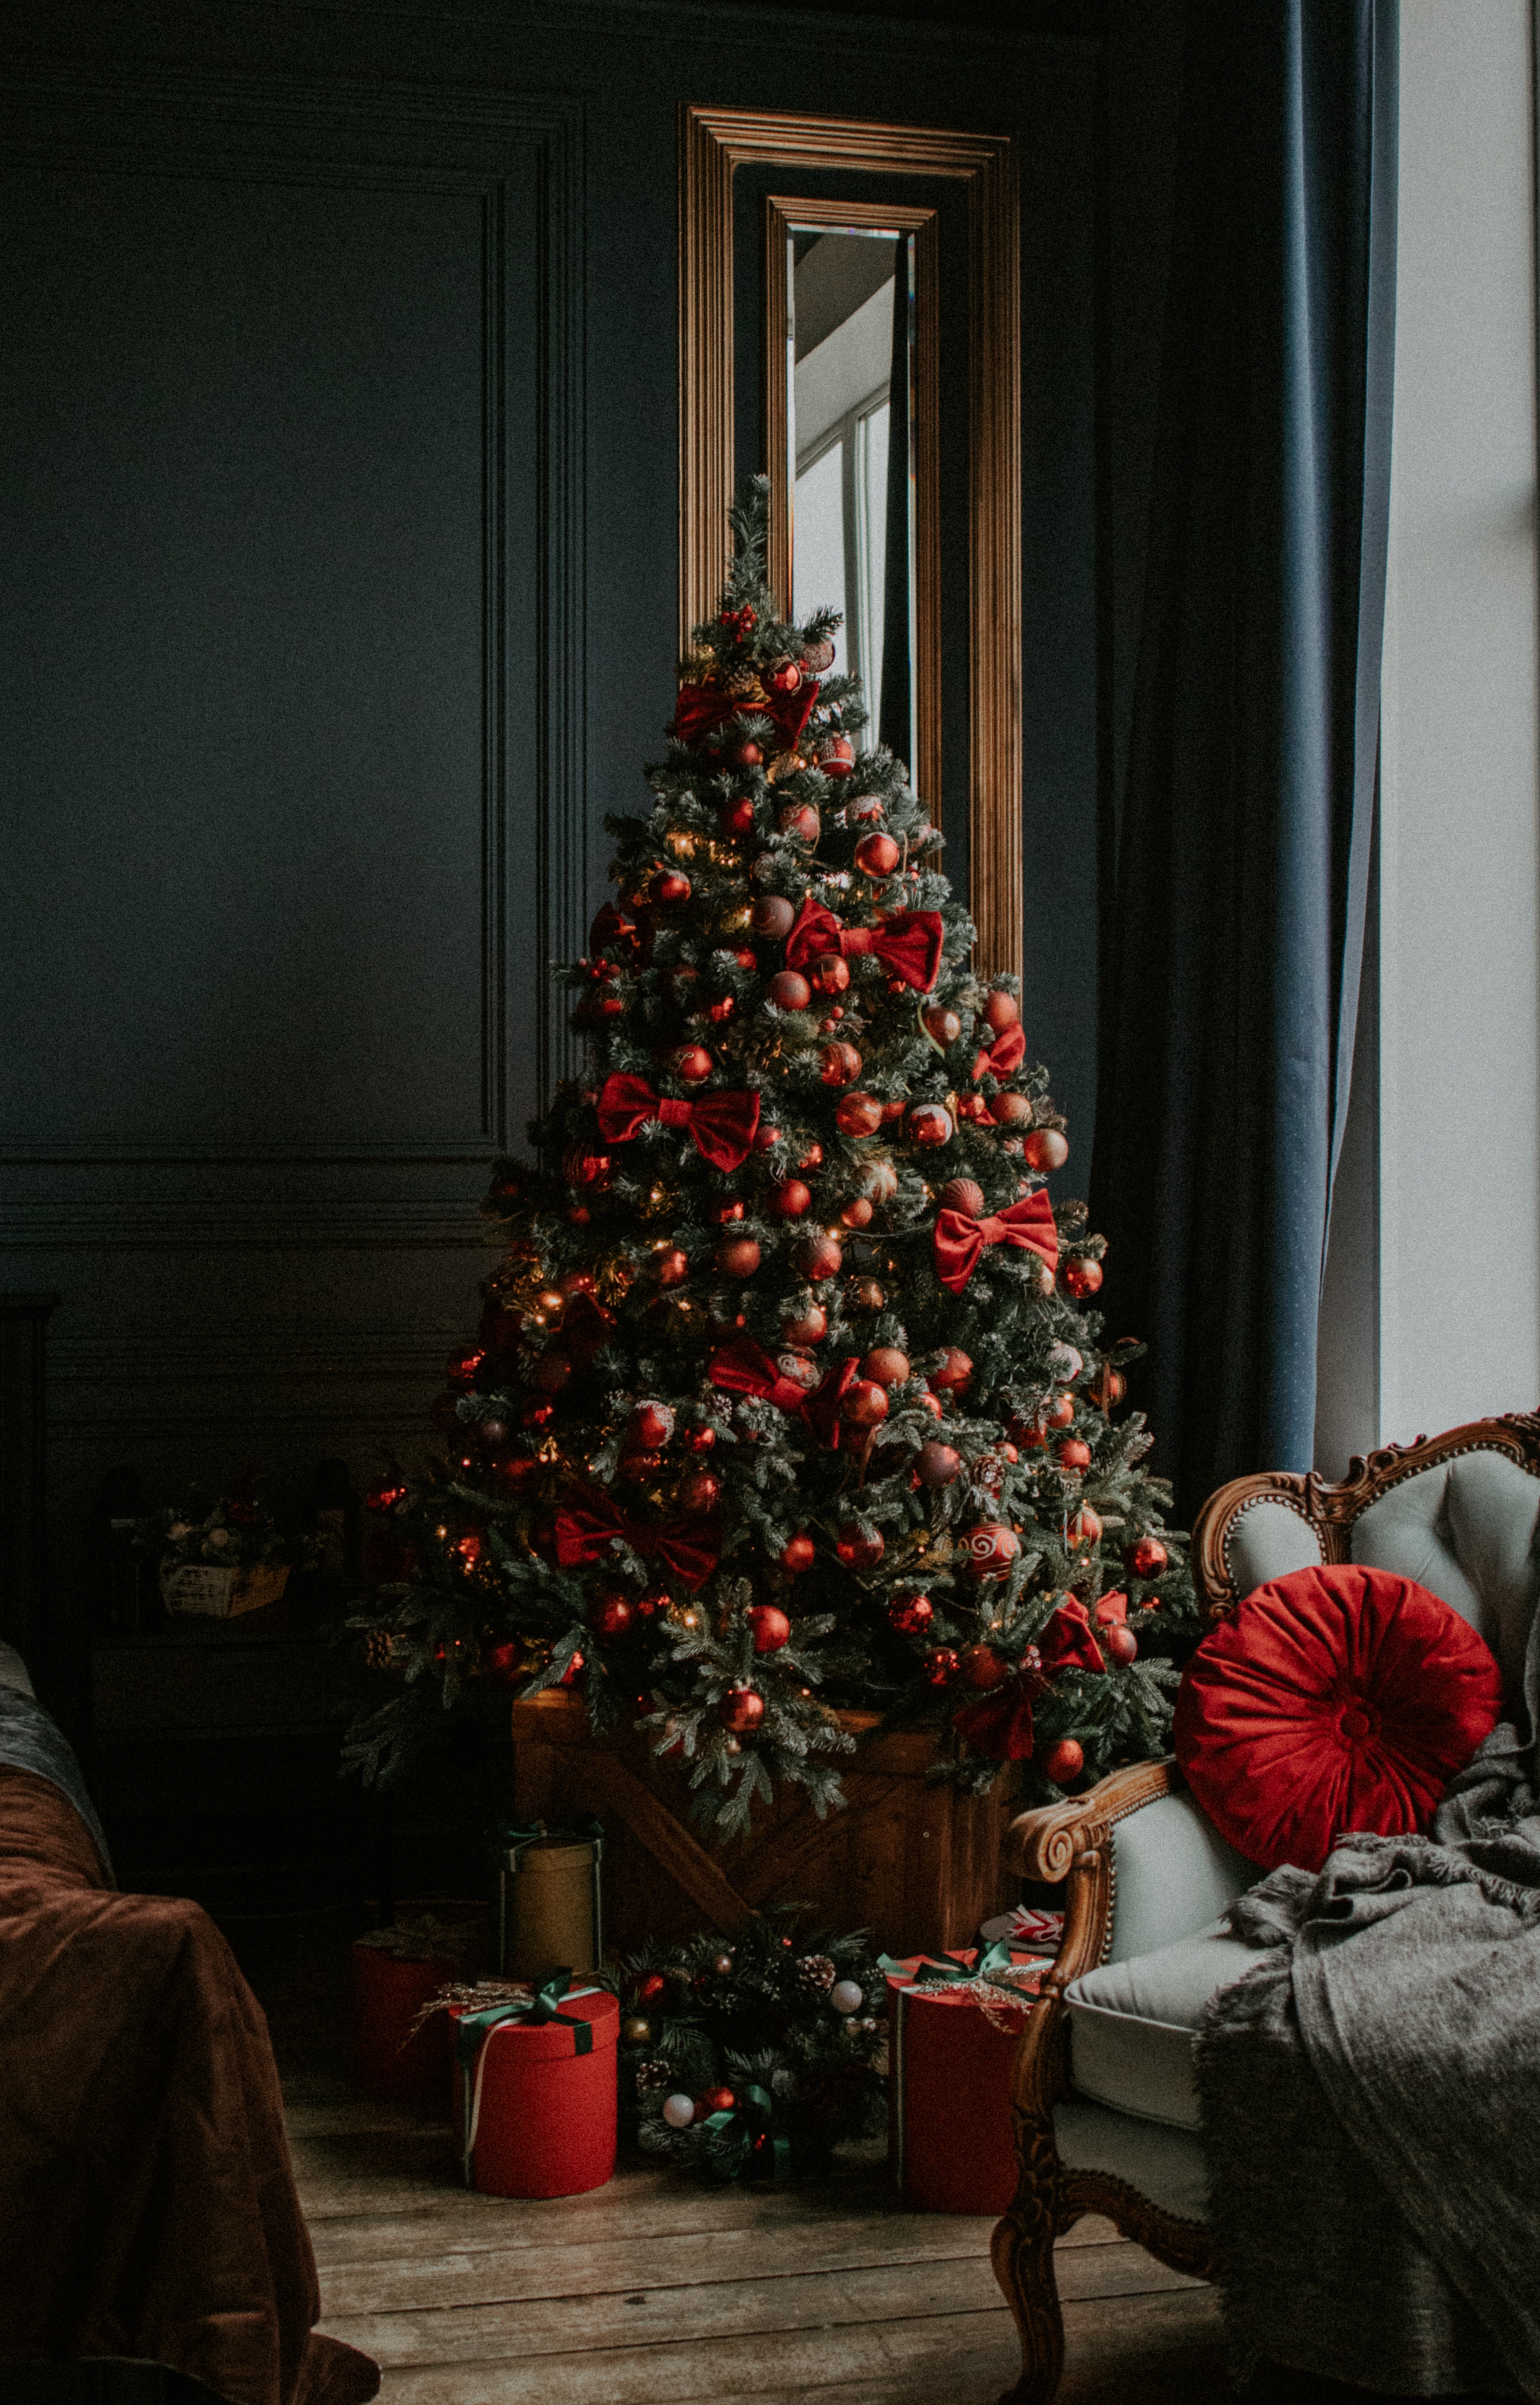 1080p Christmas Tree Hd Images